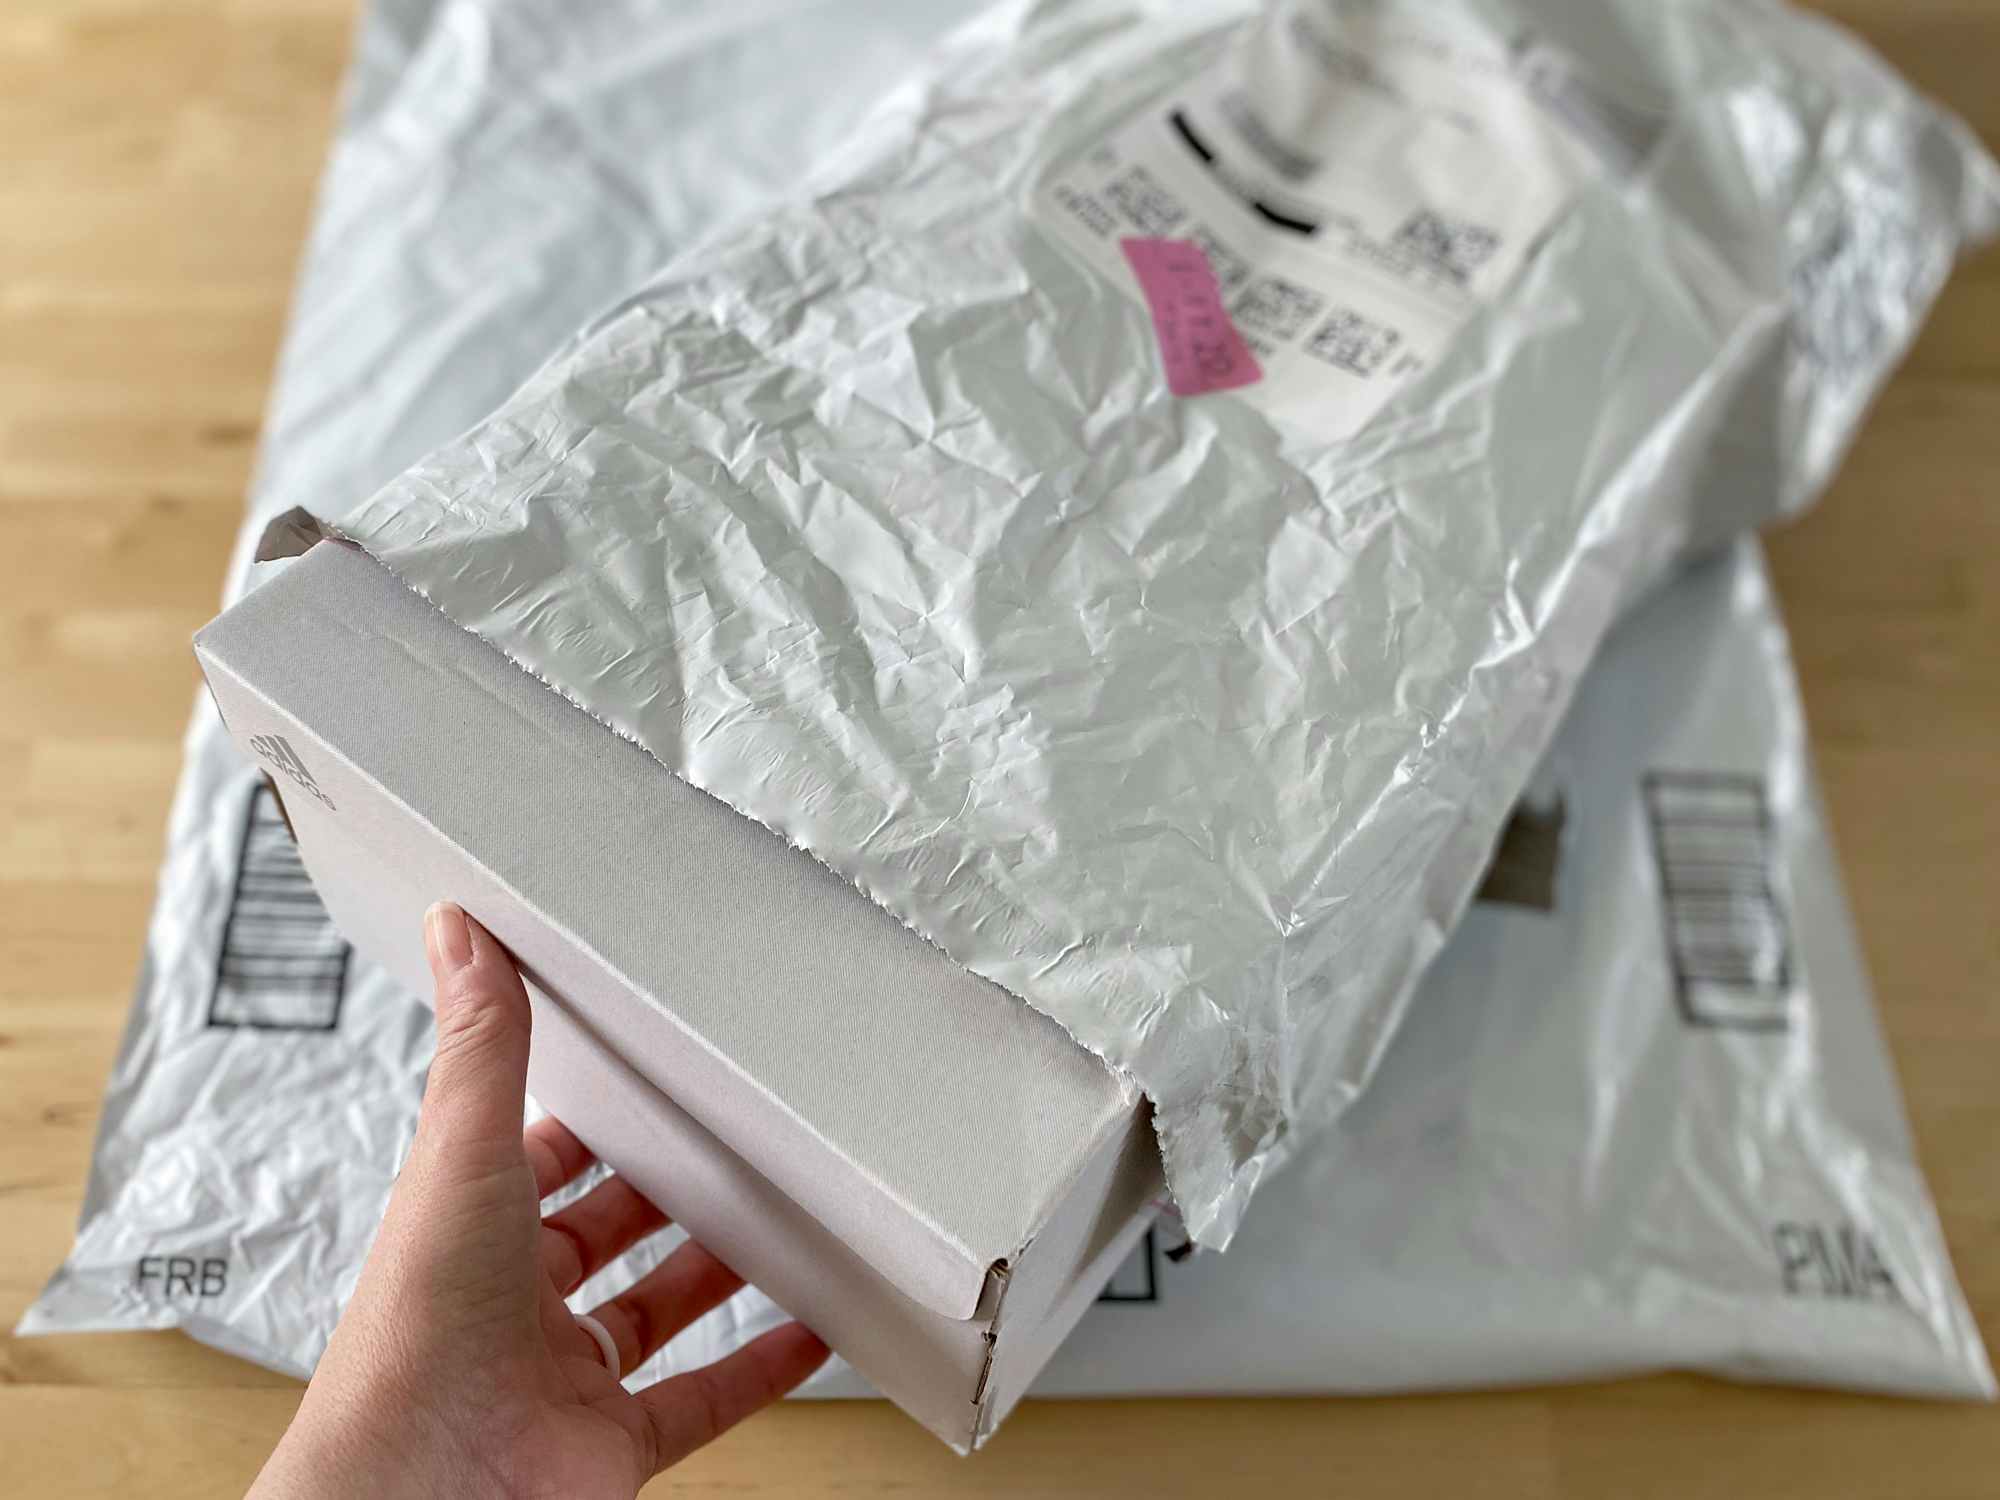 person placing shoe box into original packaging